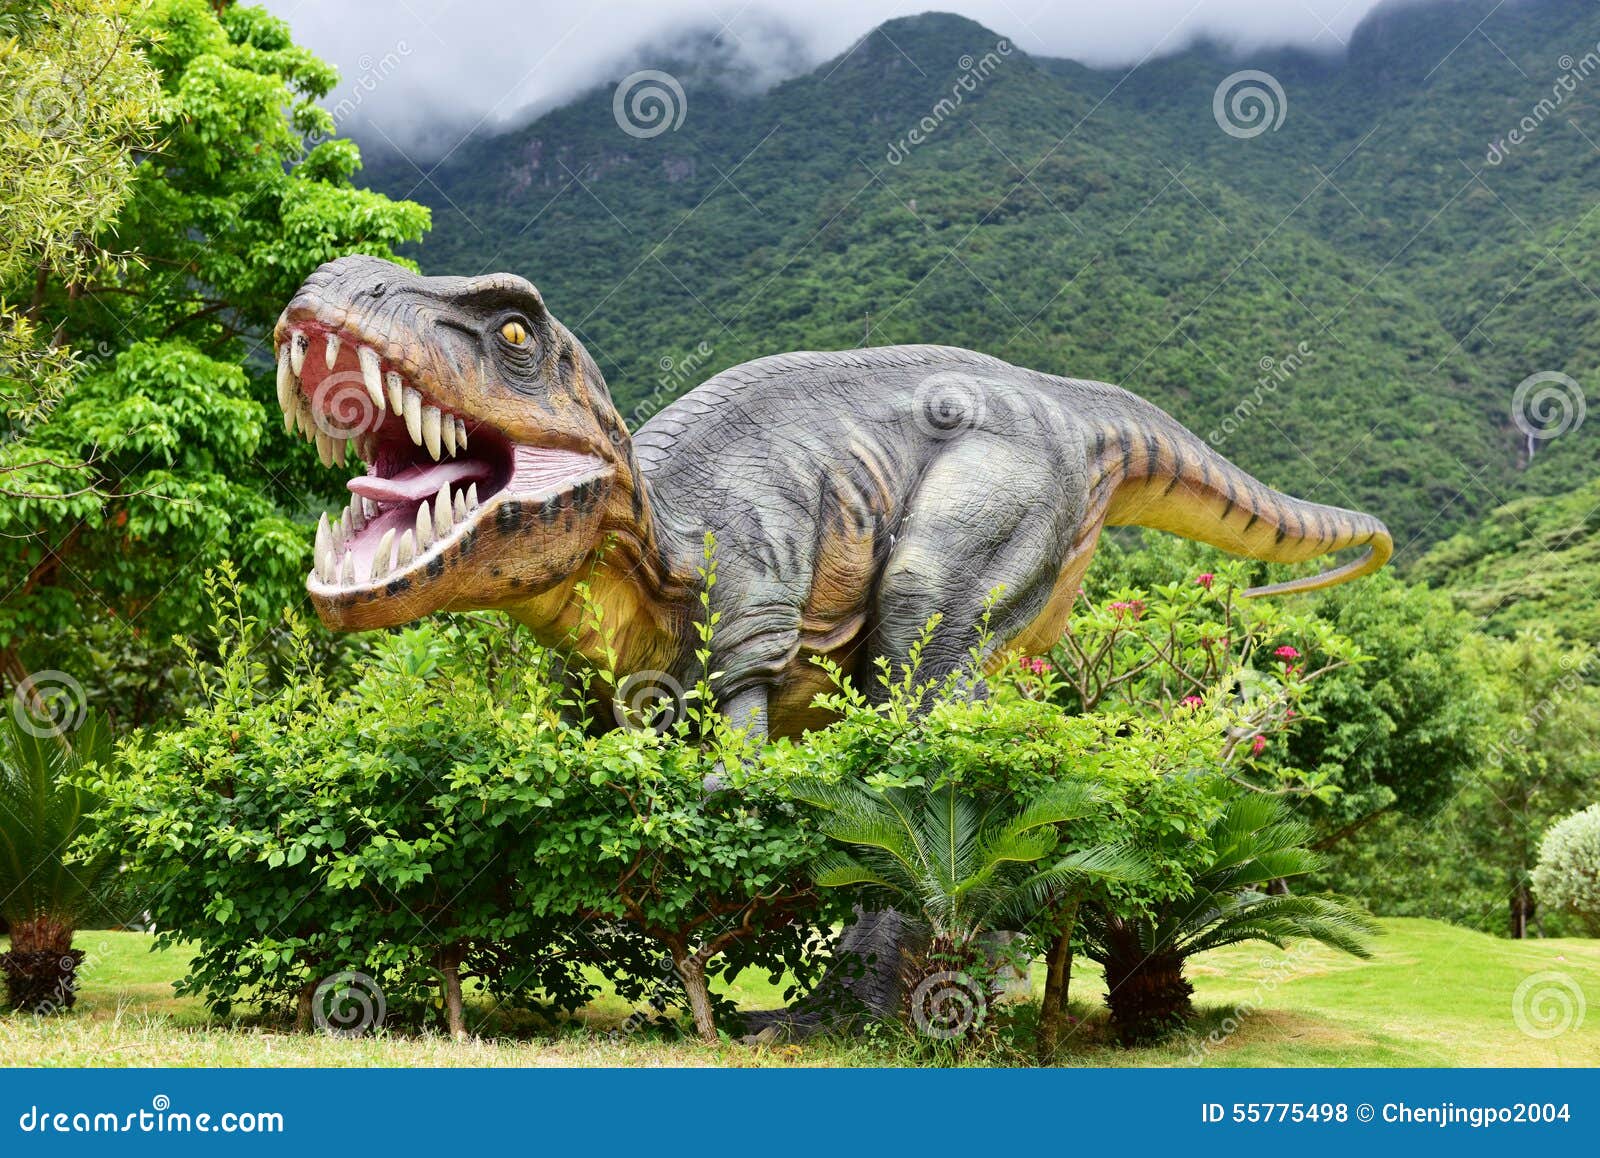 46,488 Dinosaur Stock Photos - Free & Royalty-Free Stock Photos from  Dreamstime